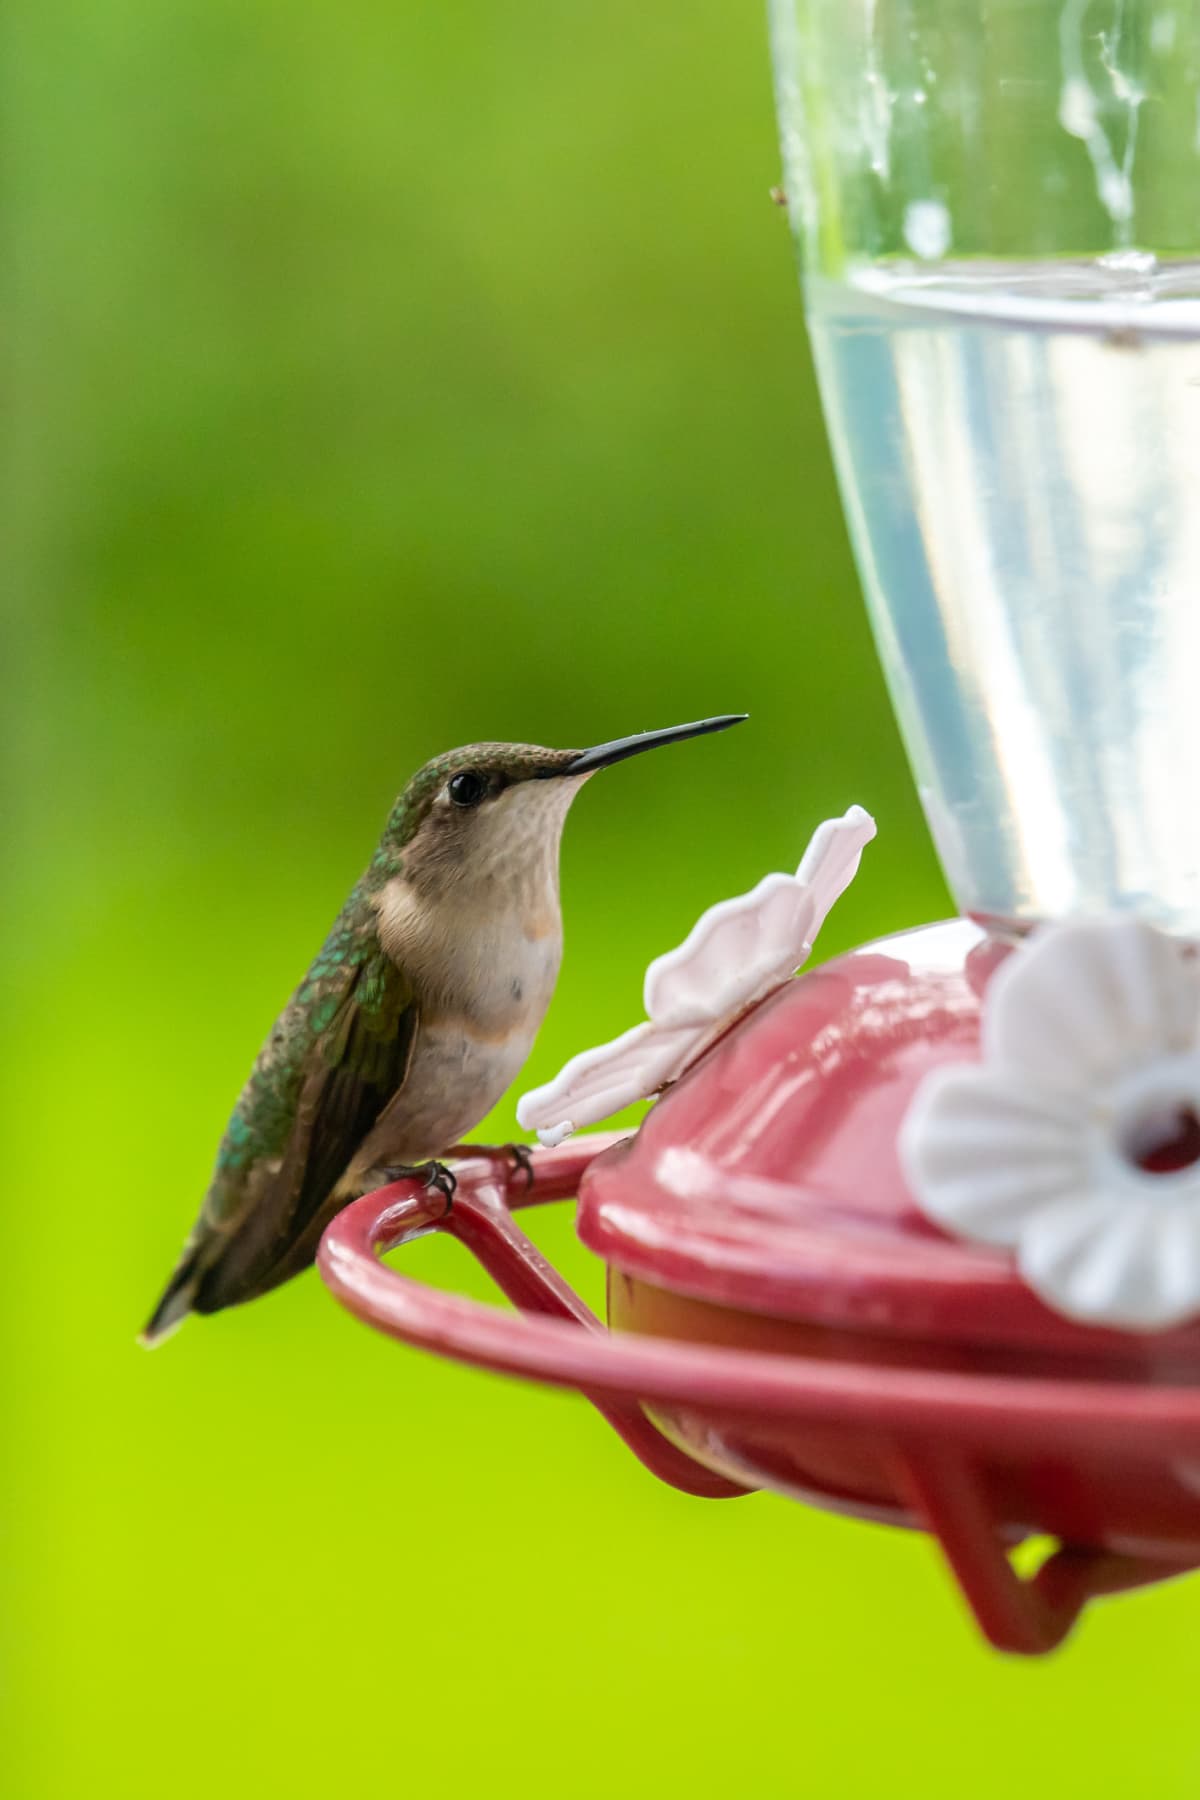 A cute Hummingbird enjoying sugar water from a red bird feeder